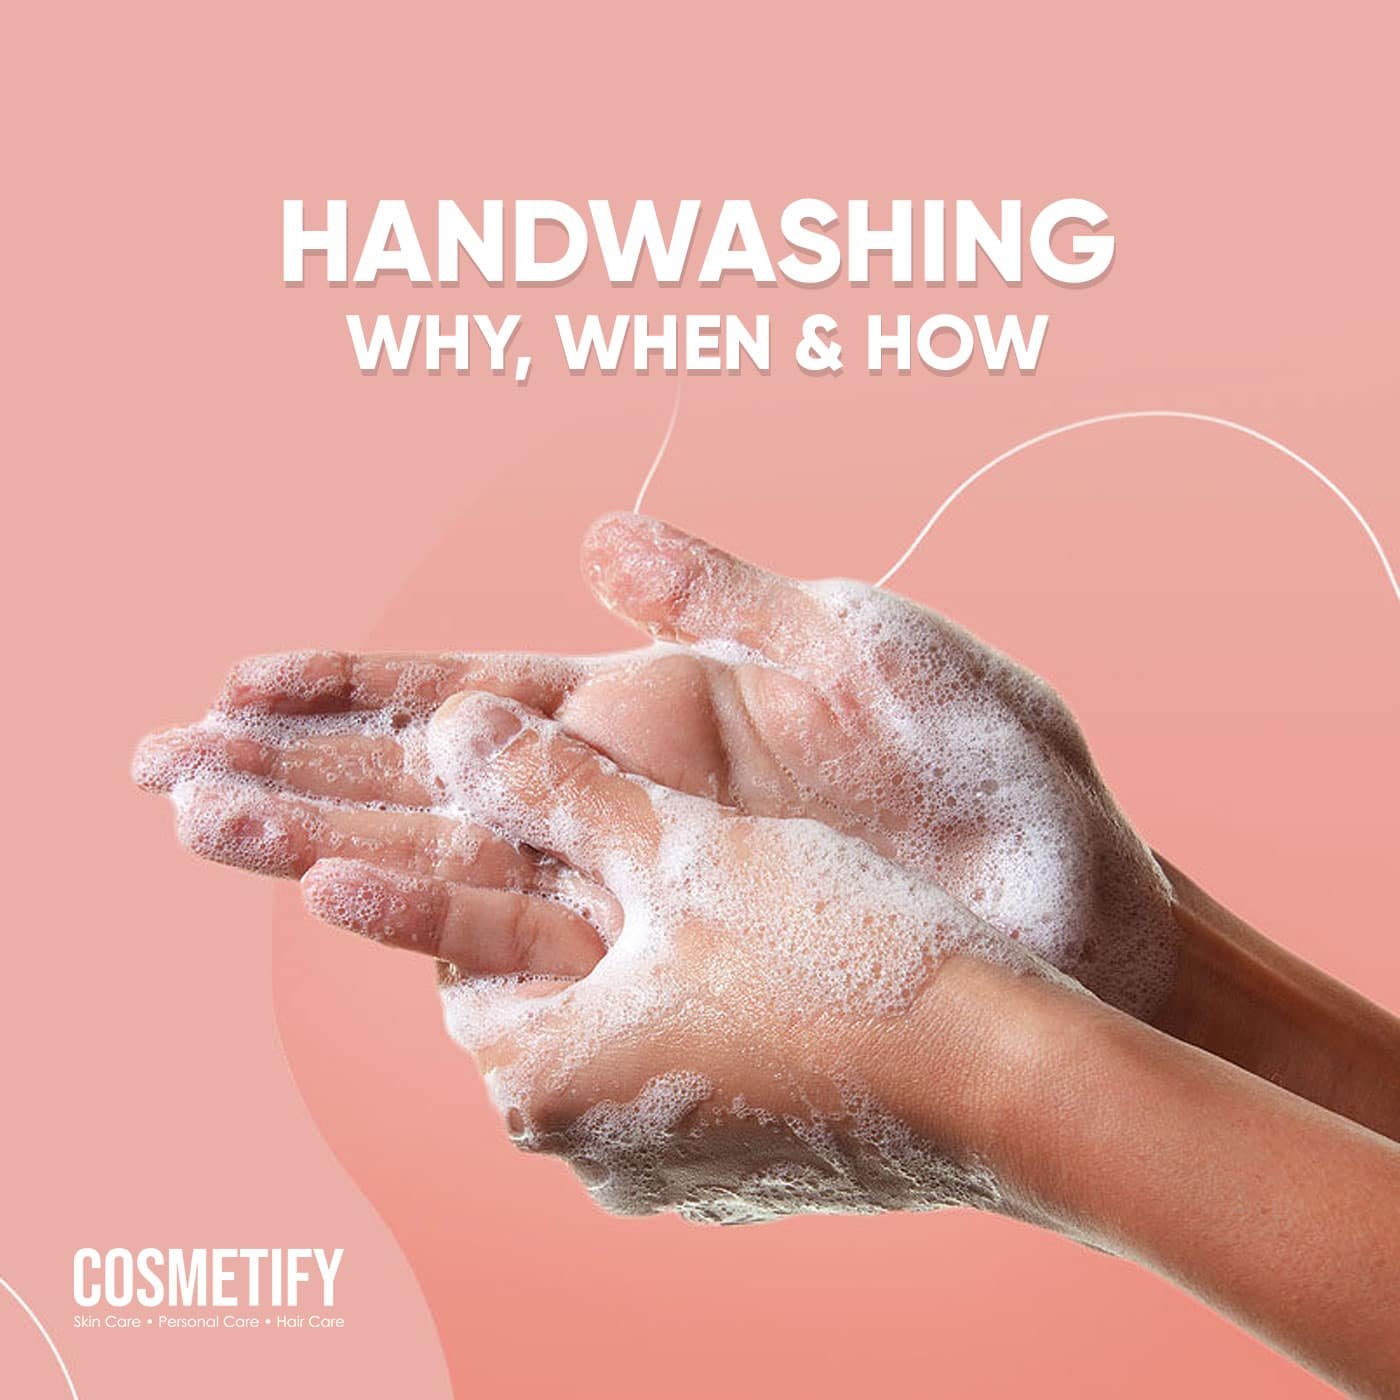 Handwashing: Why, When & How?